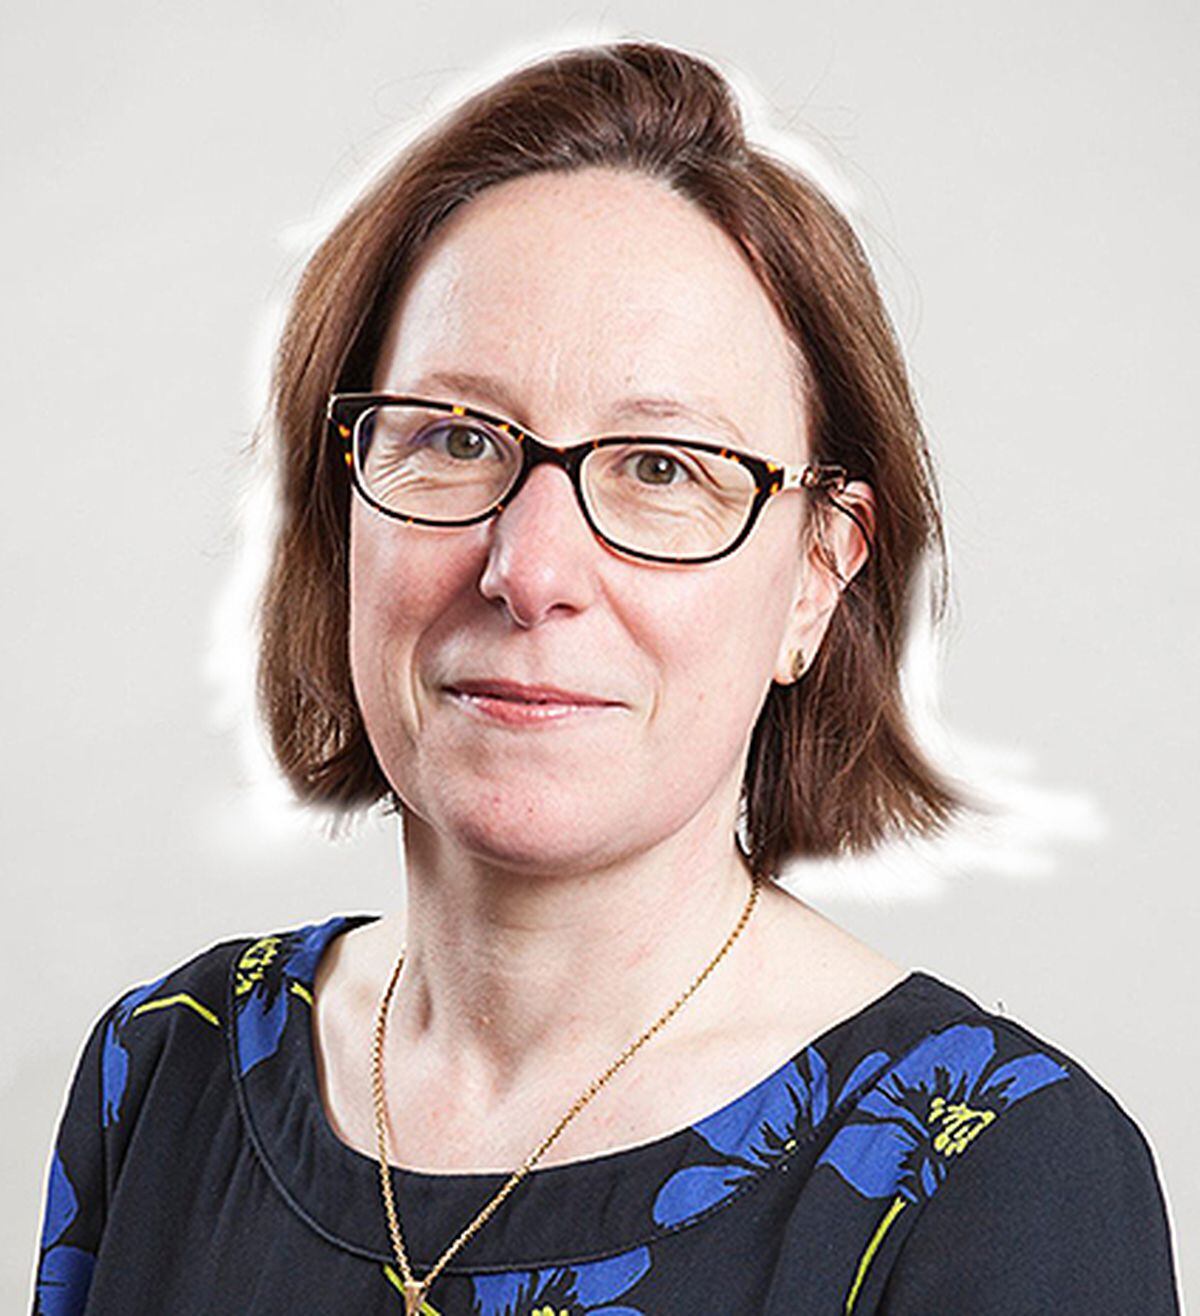 Clare Sumner, Director of BBC Policy